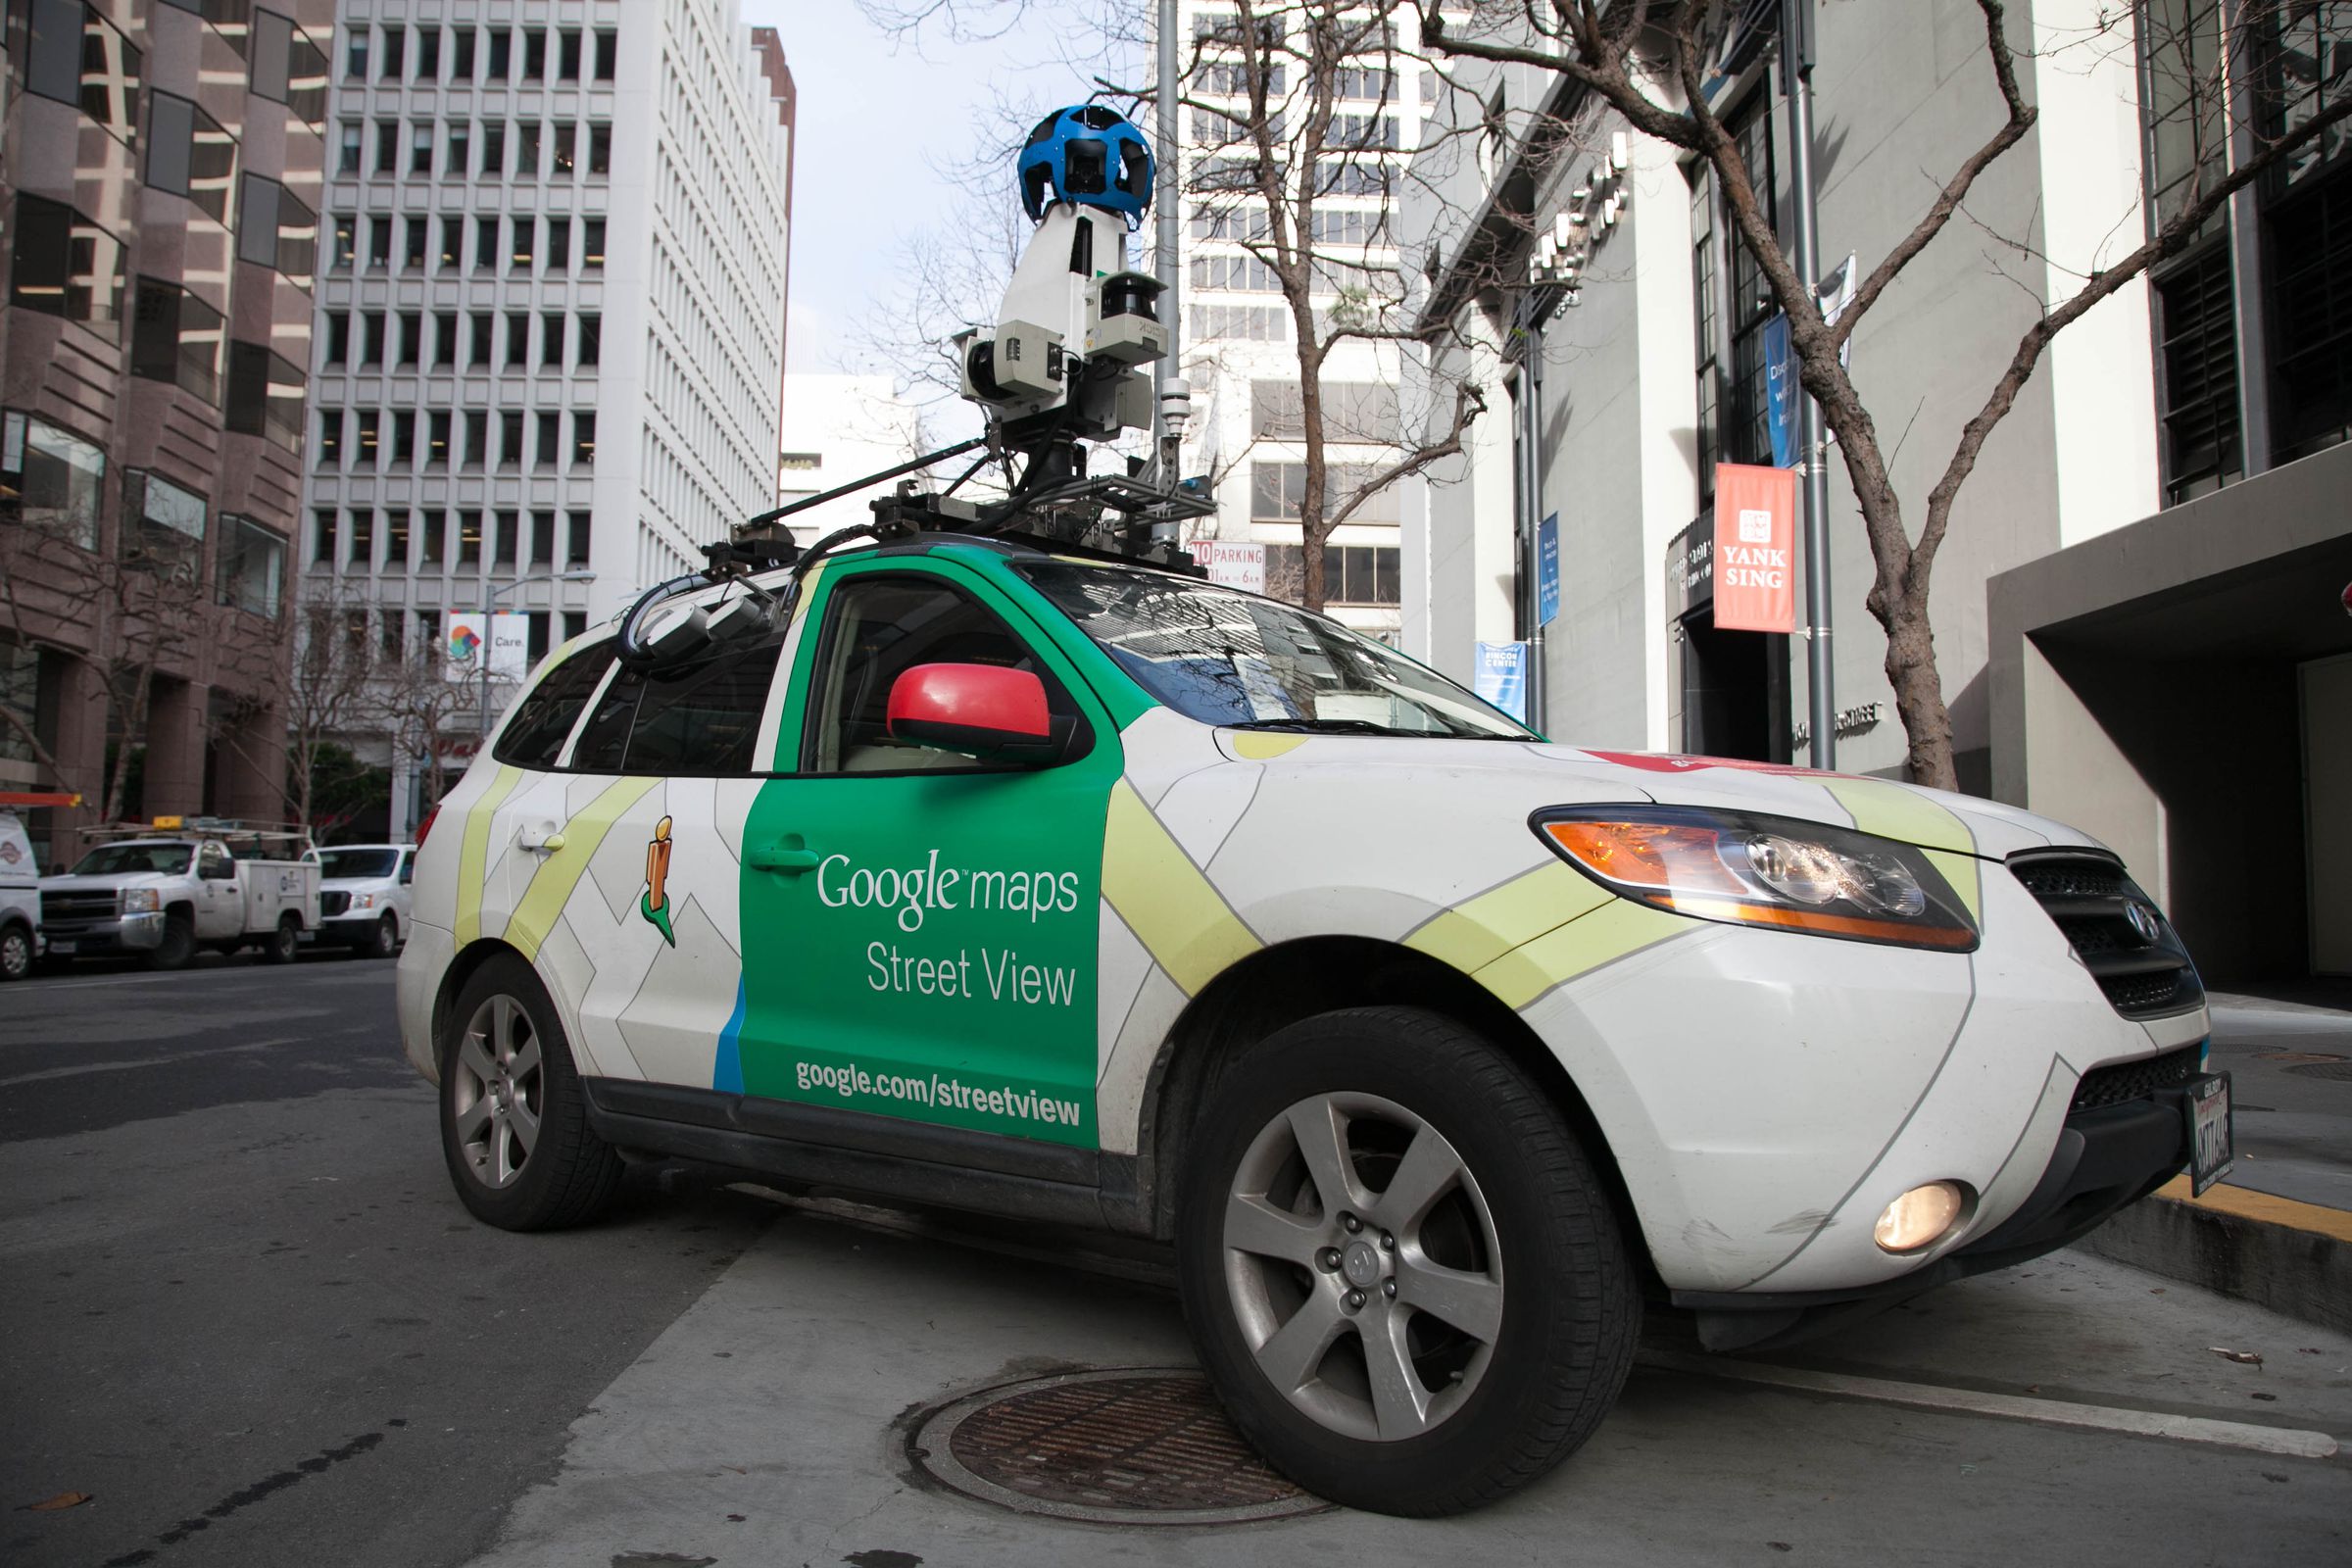 Google Street View car with an Aclima air pollution sensor